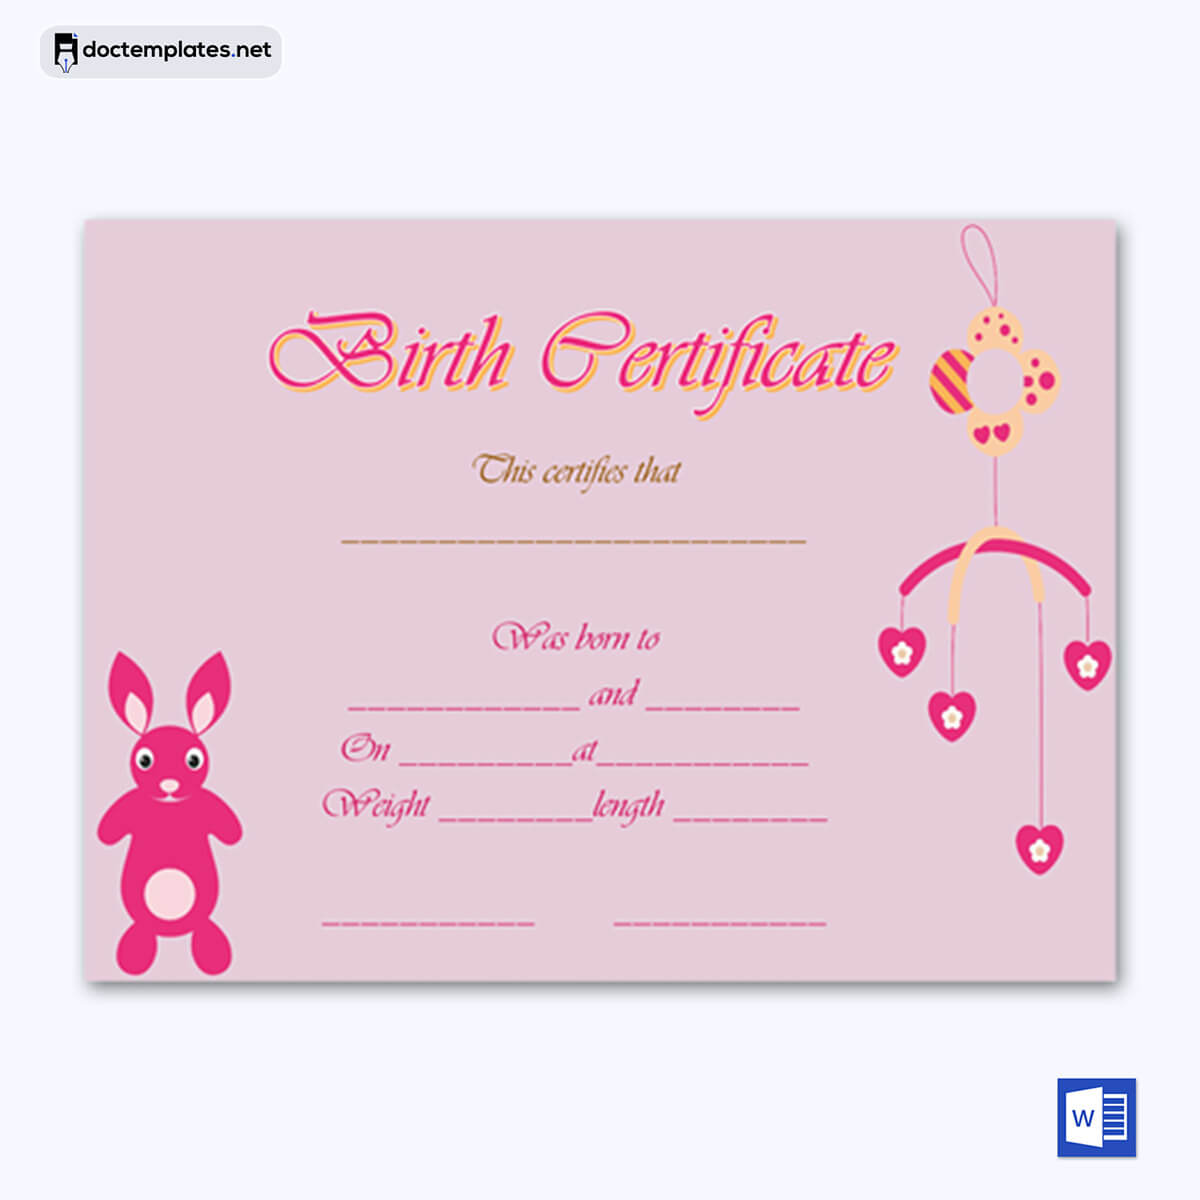 
birth certificate template word
 07